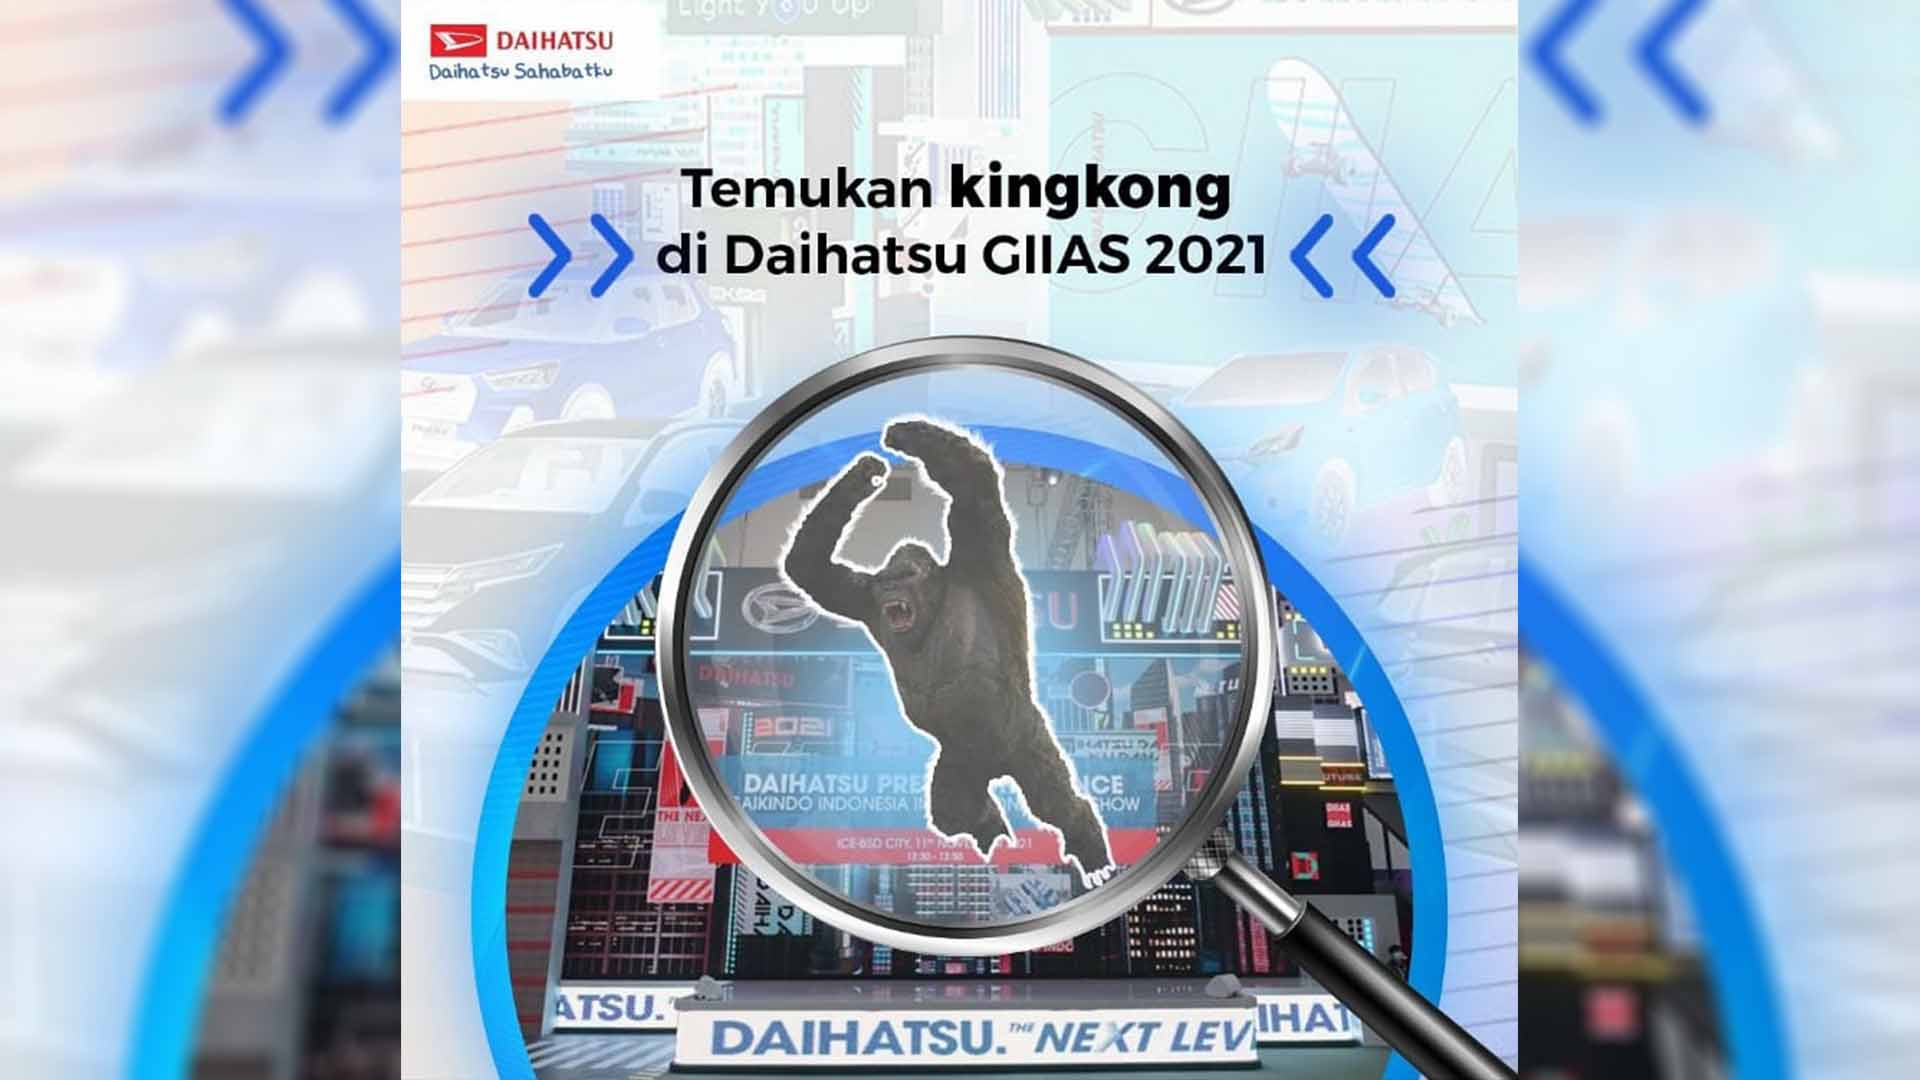 Advertorial, Daihatsu GIIAS 2021: GIIAS 2021: Daihatsu Tantang Pengunjung Temukan Kingkong di Booth Mereka